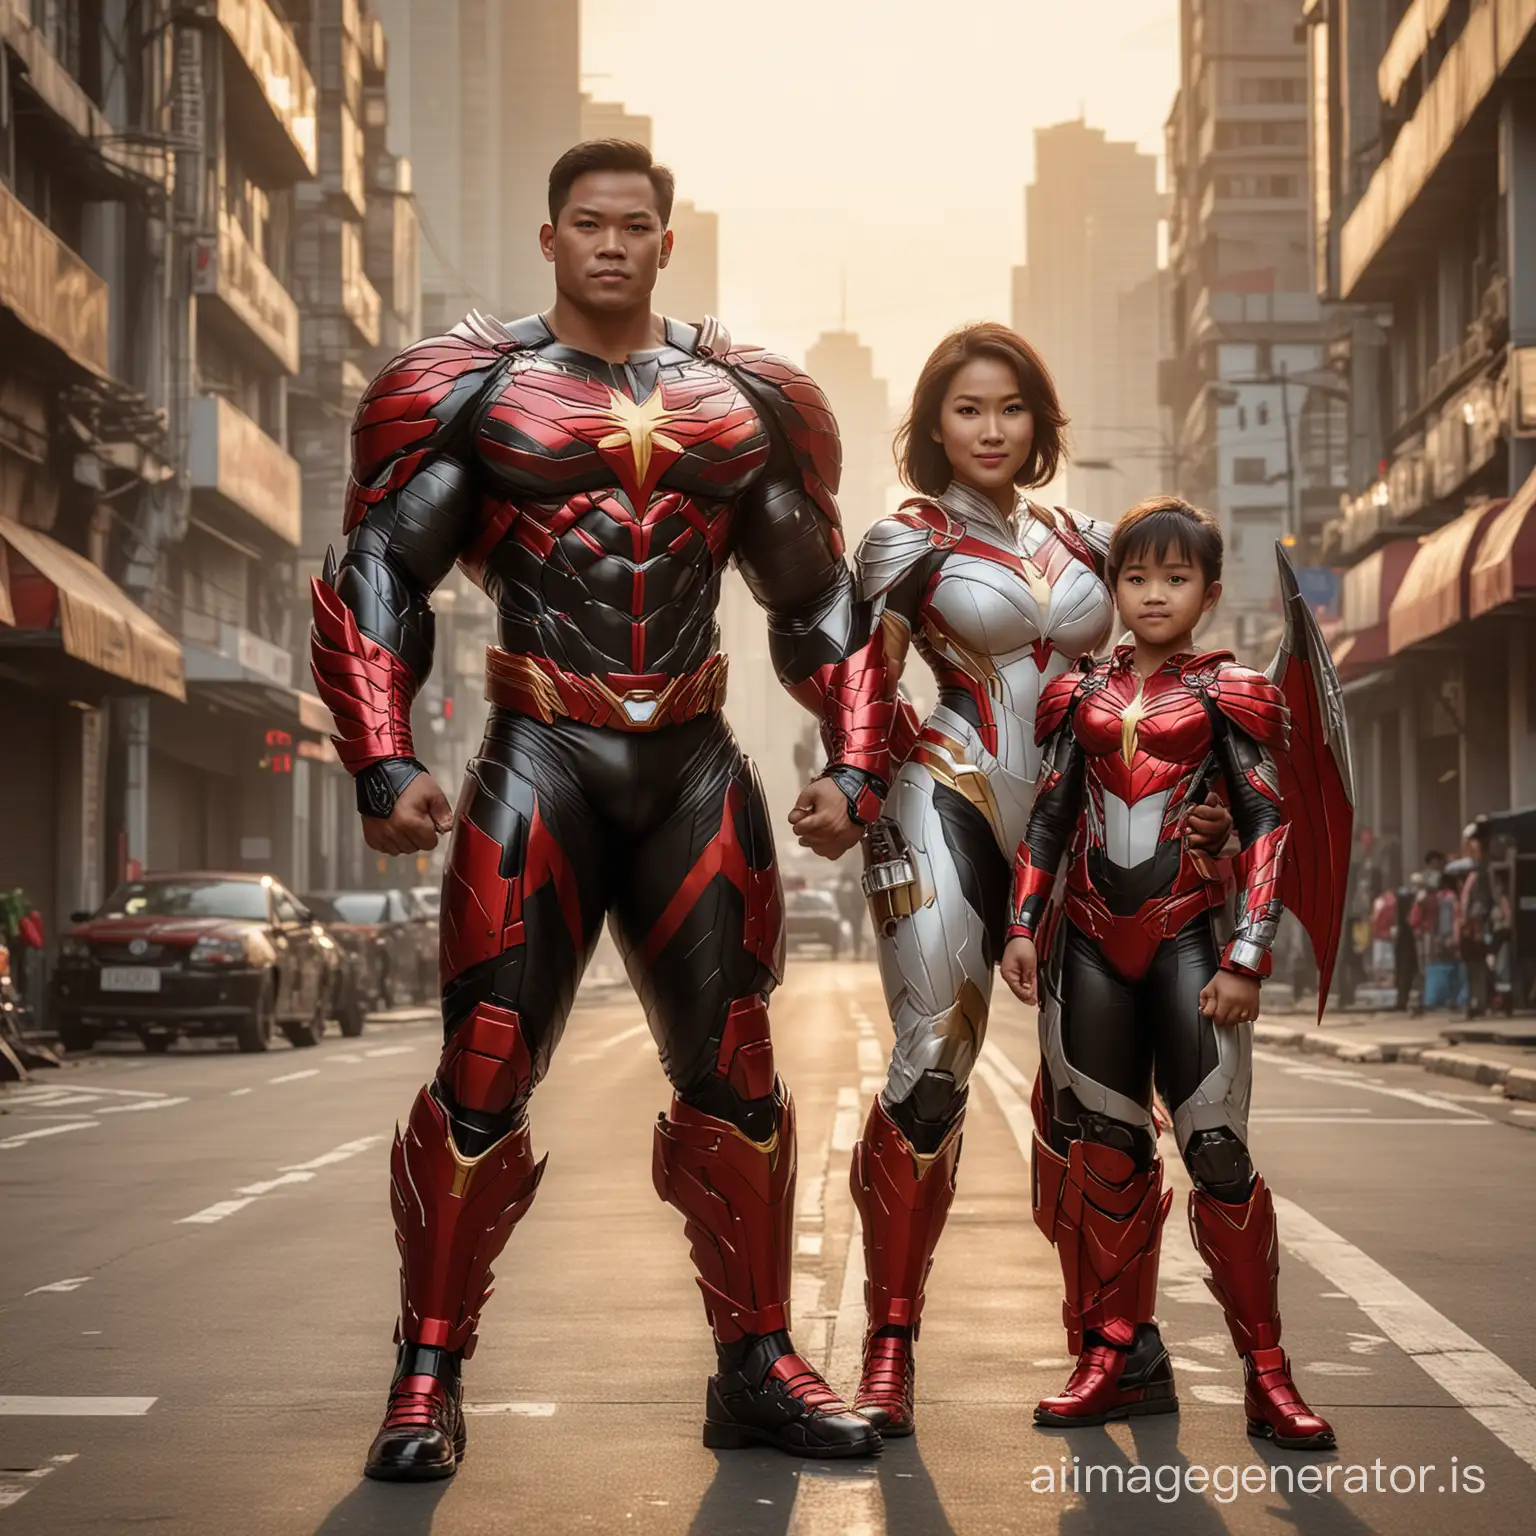 Superhero-Chubby-Indonesian-Family-Soars-Over-Cityscape-in-Futuristic-Armor